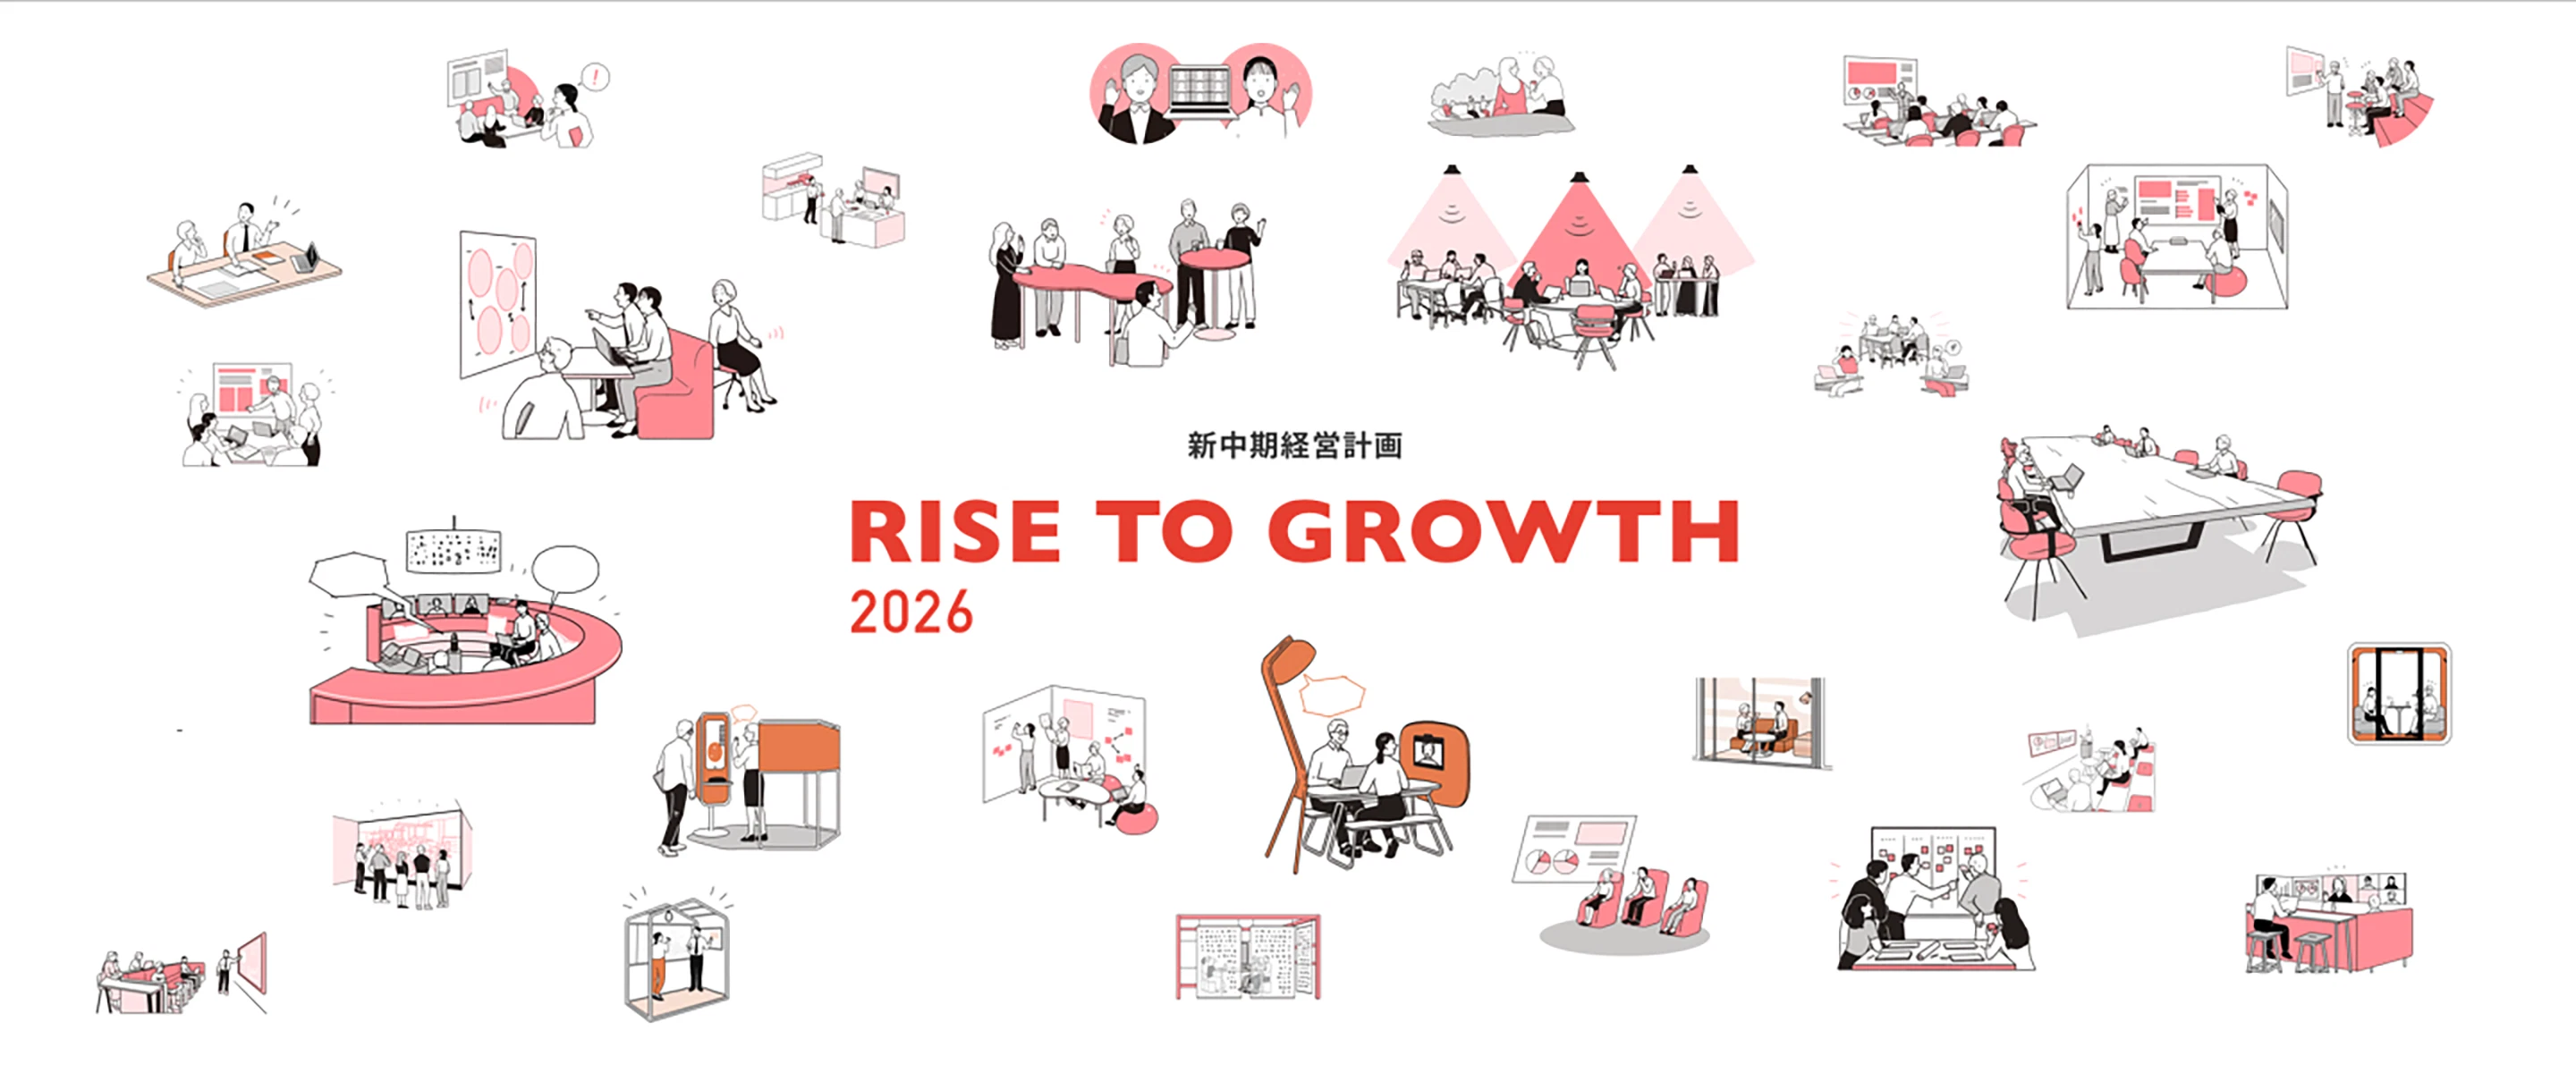 New Medium-Term Management Plan RISE TO GROWTH 2026